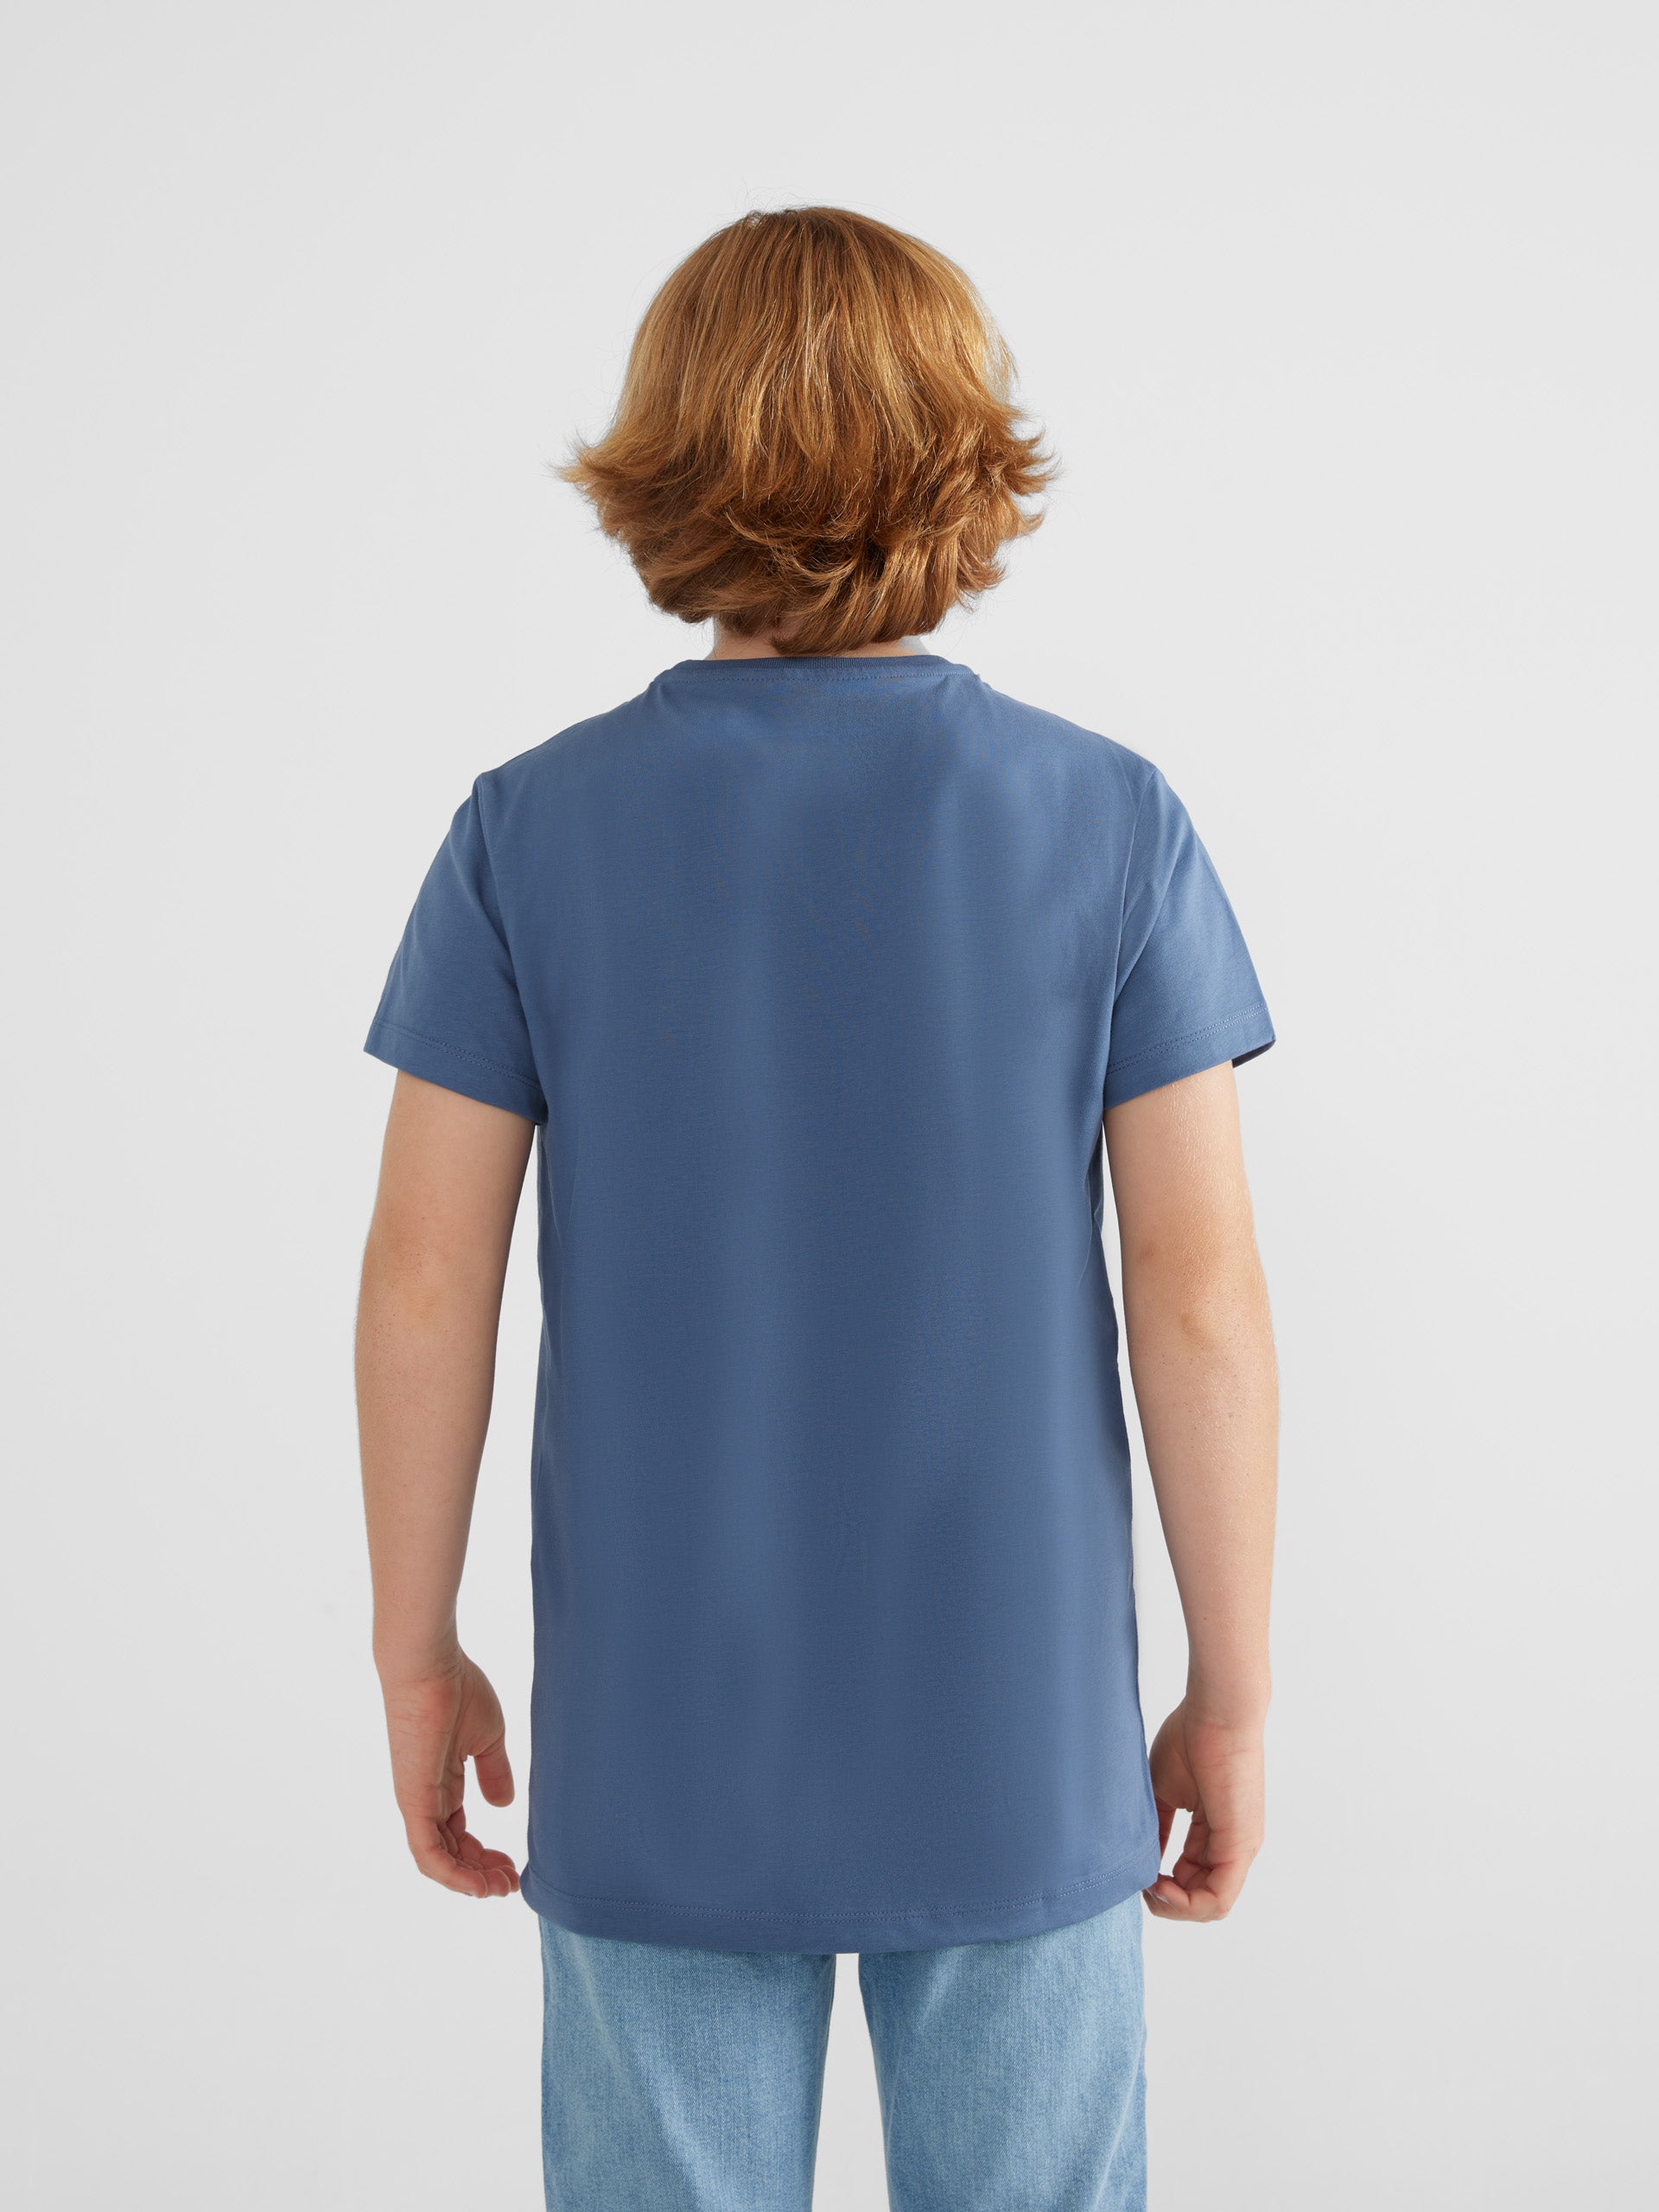 Blue pixel corporate kids t-shirt